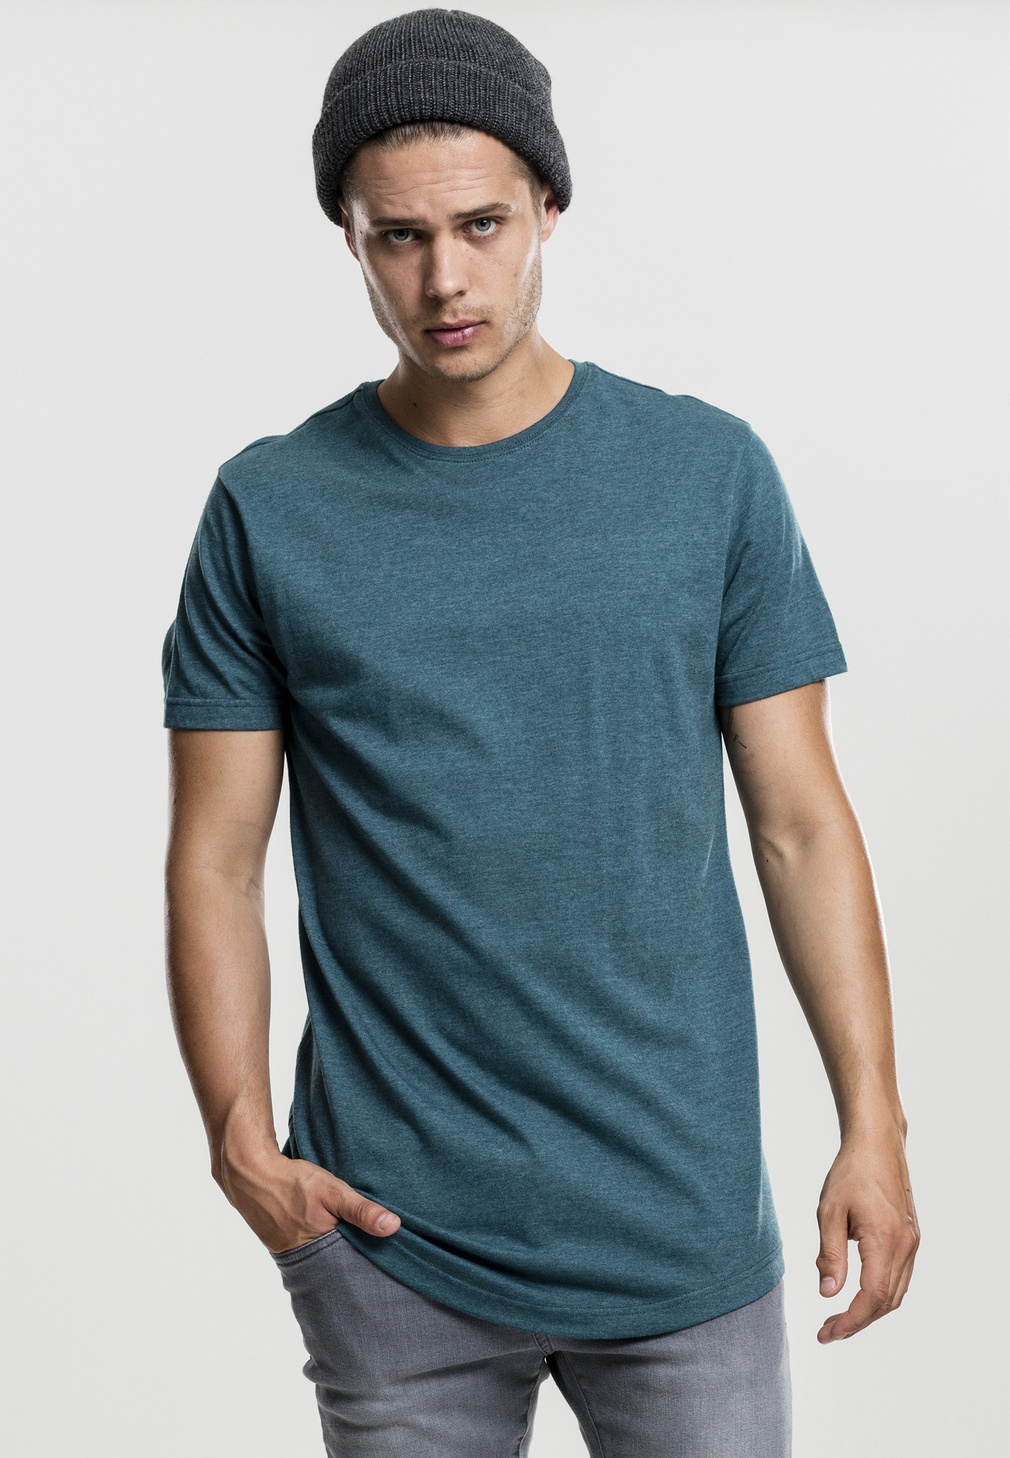 Herren Tee Urban Shaped Melange Classics Charcoal T-Shirt Tops T-Shirts Long Lifestyle / | | |